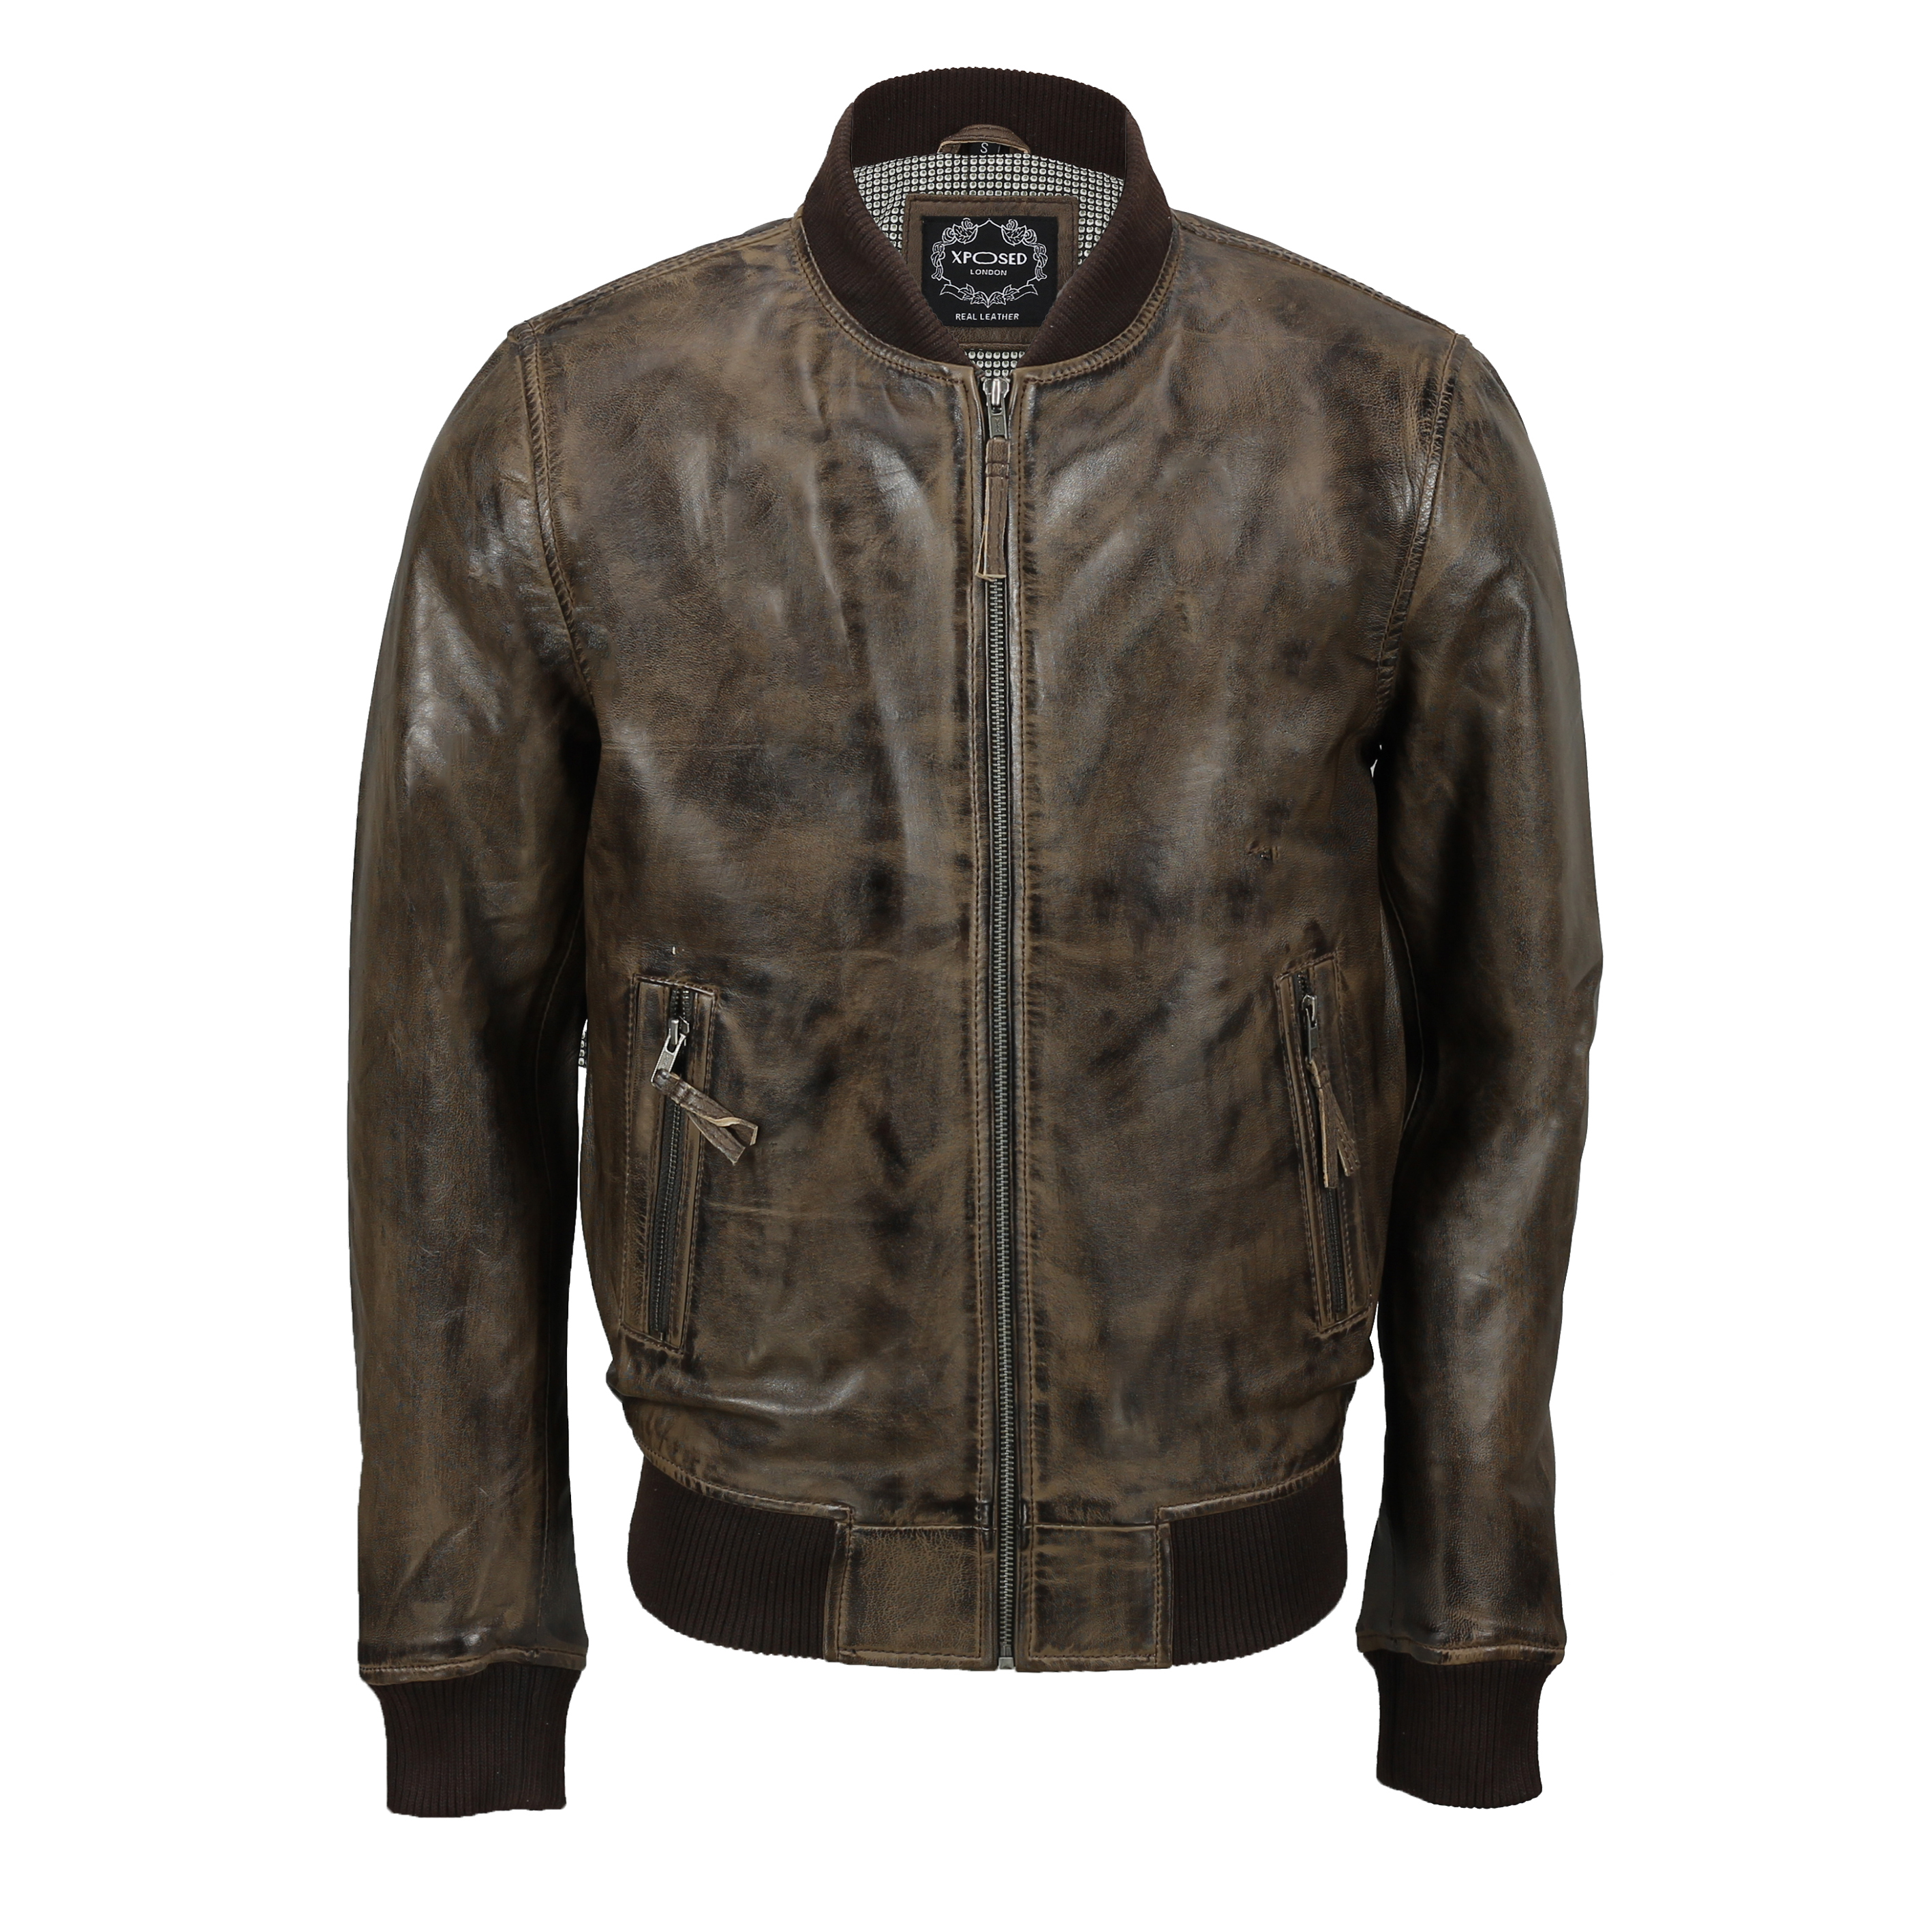 Gearswears Mens Leather Jacket Real Soft Antique Washed Rust Black Vintage Zipped Smart Casual Biker Jacket 